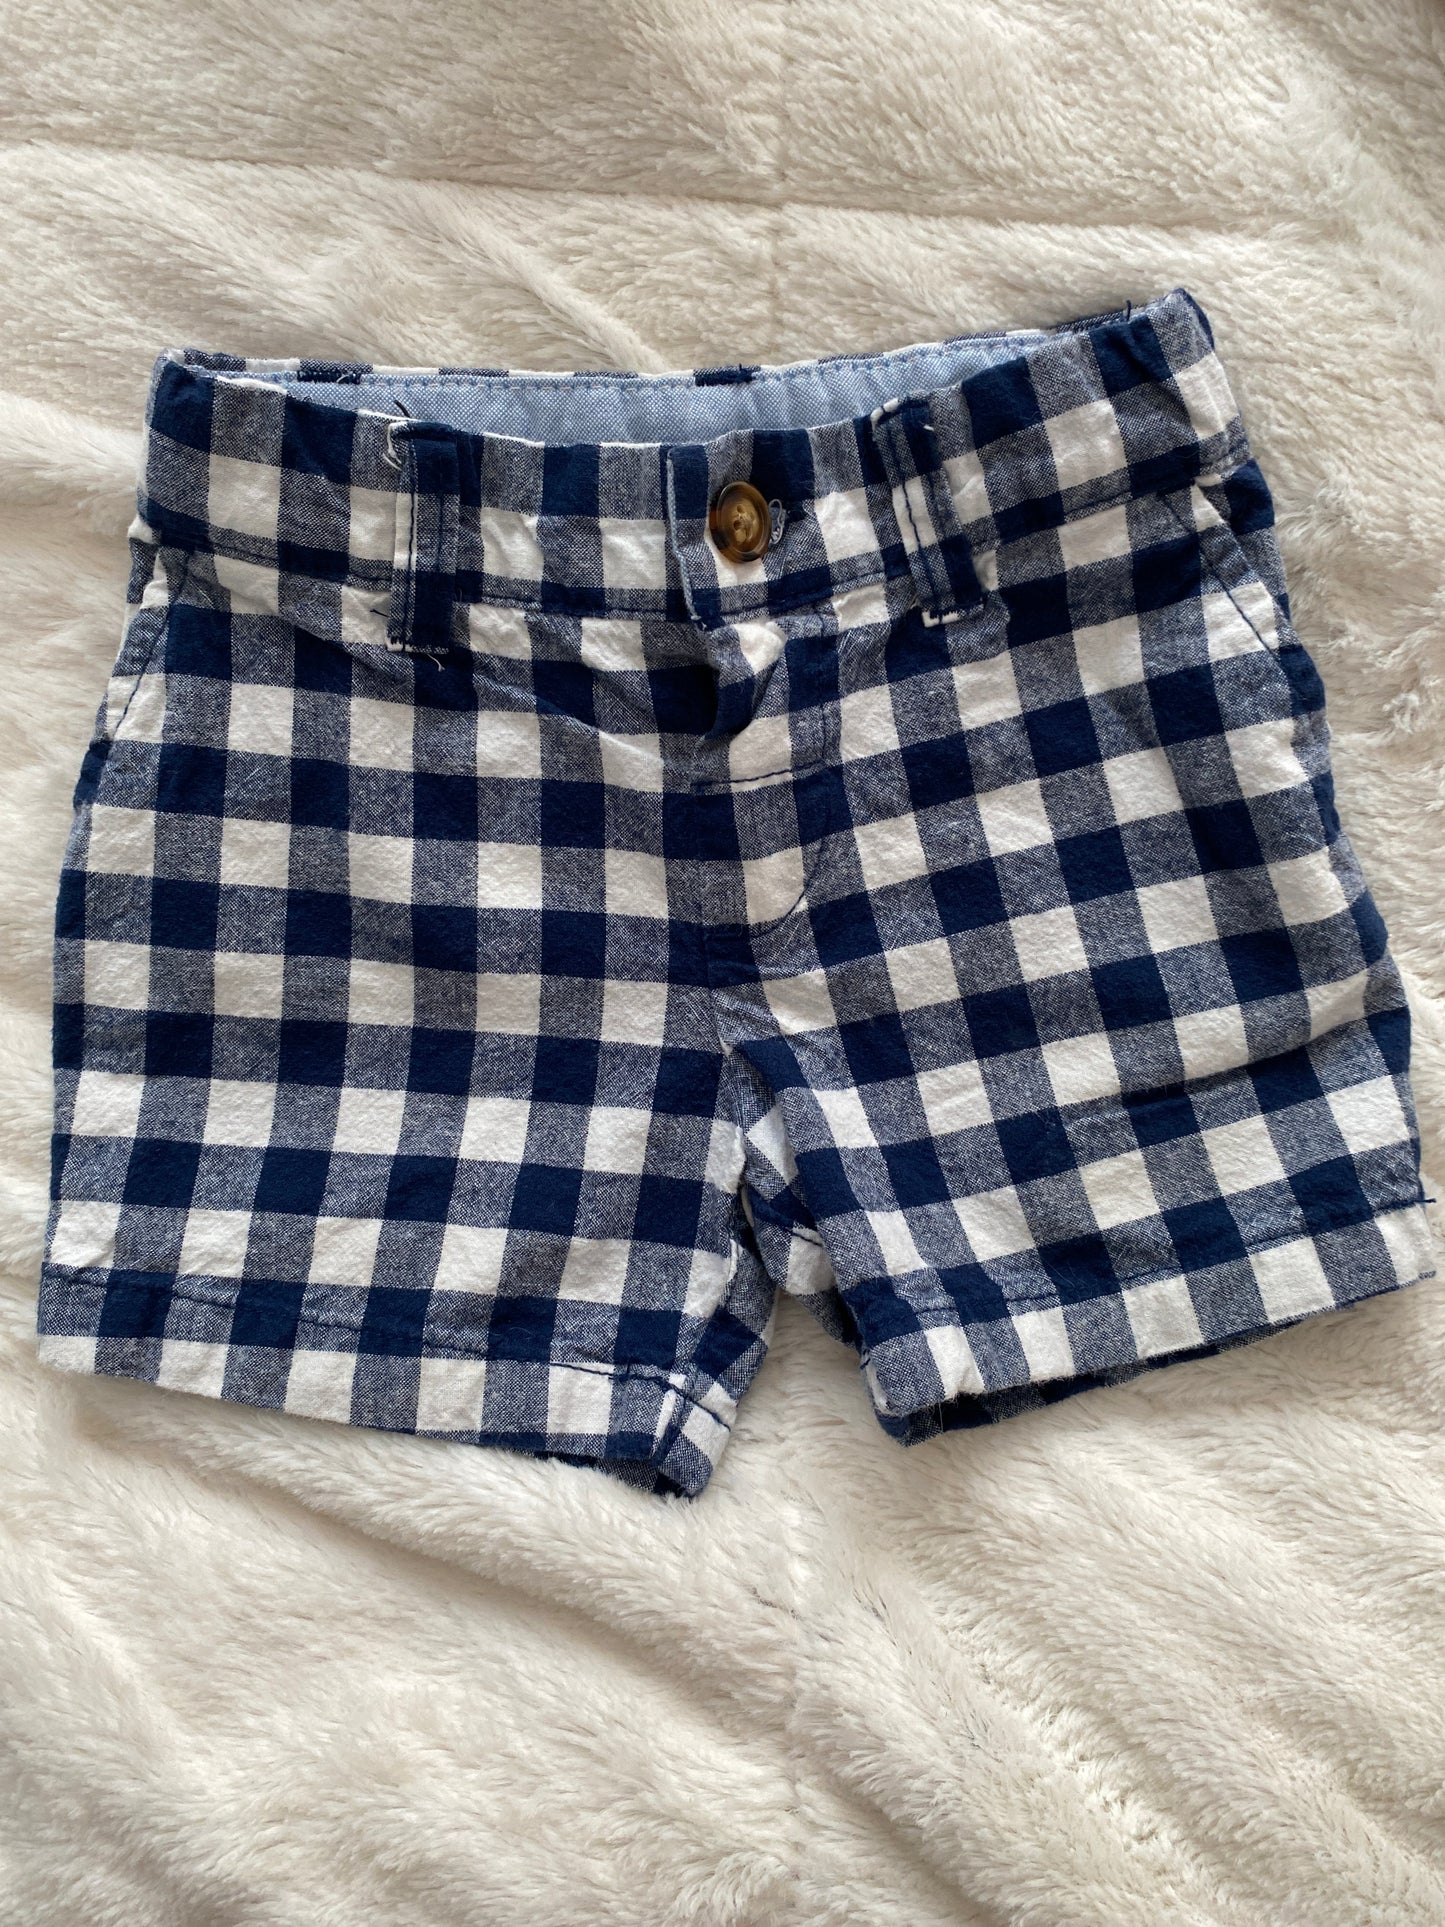 Carter's 9 mo boys plaid shorts